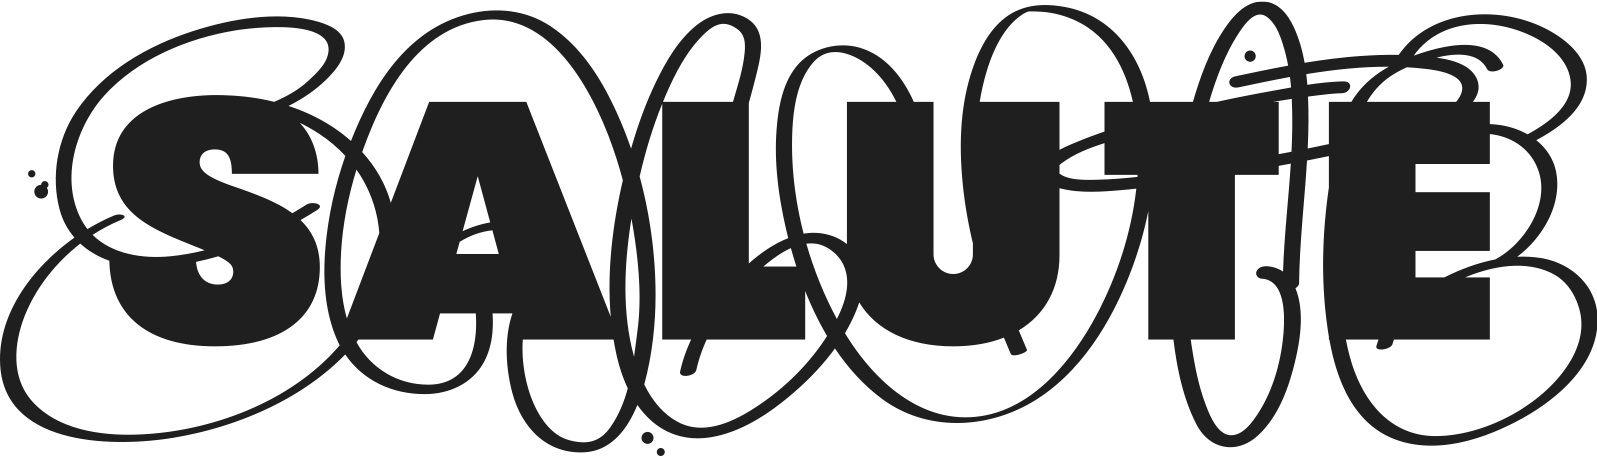 Salute Logo - Image - Salute Logo Black-copy.jpg | Logopedia | FANDOM powered by Wikia